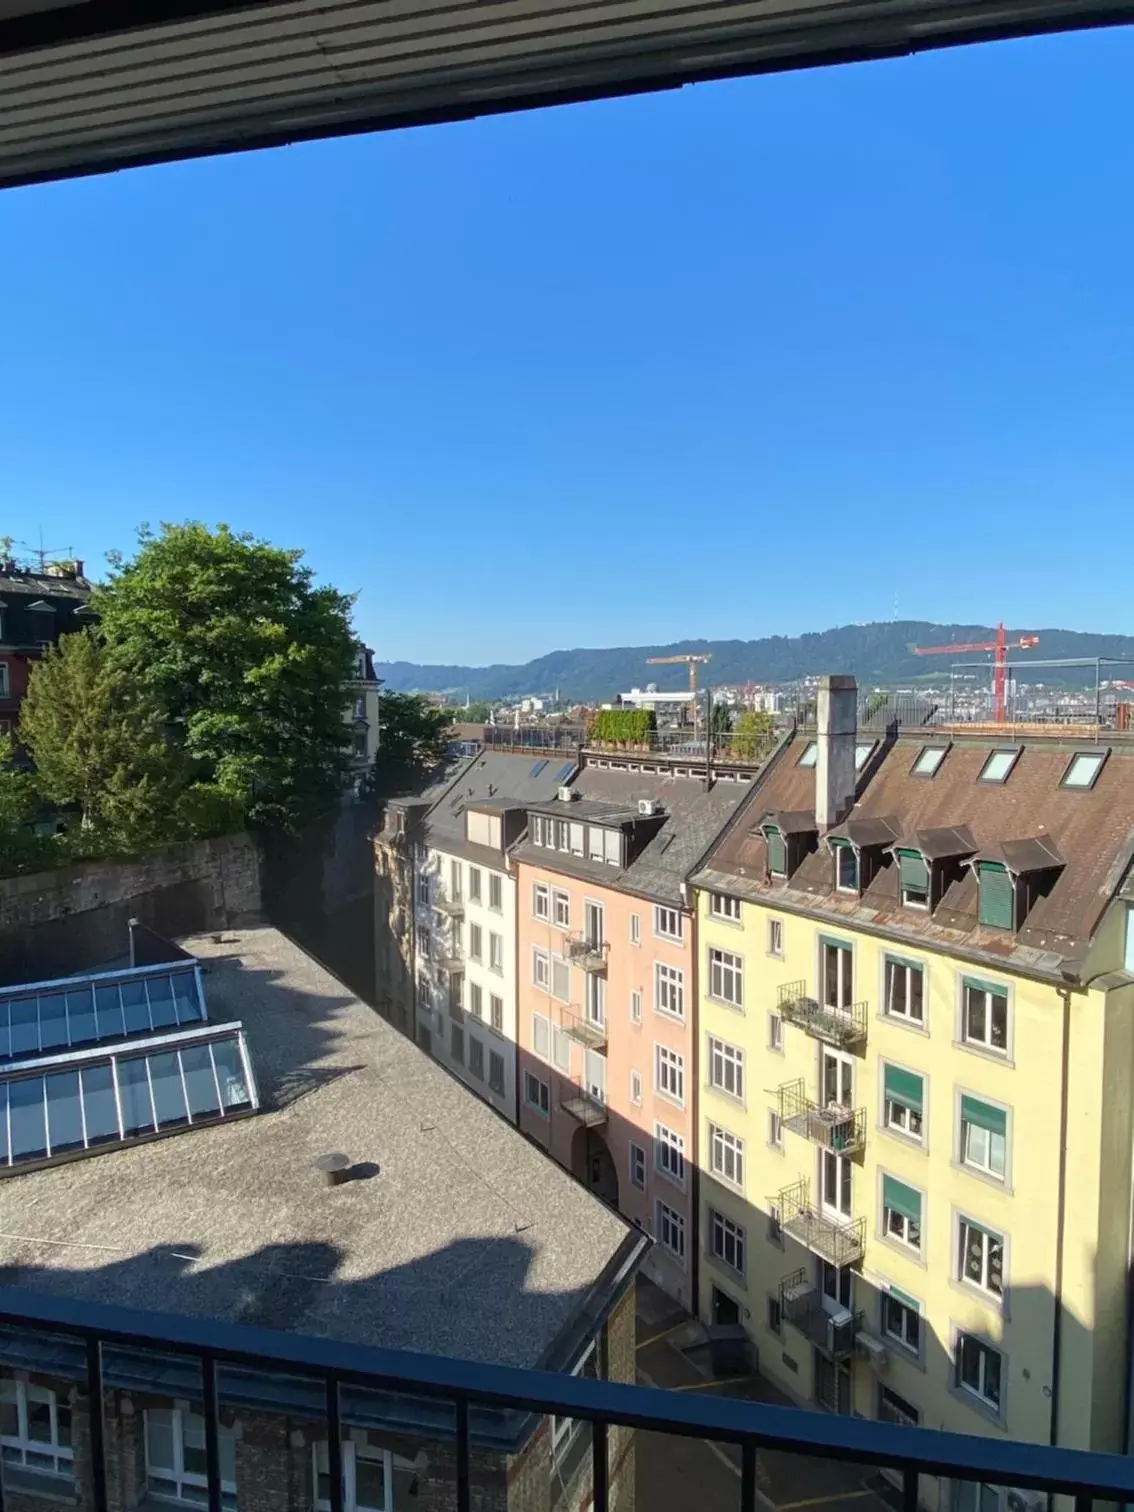 On site in Royal Hotel Zurich